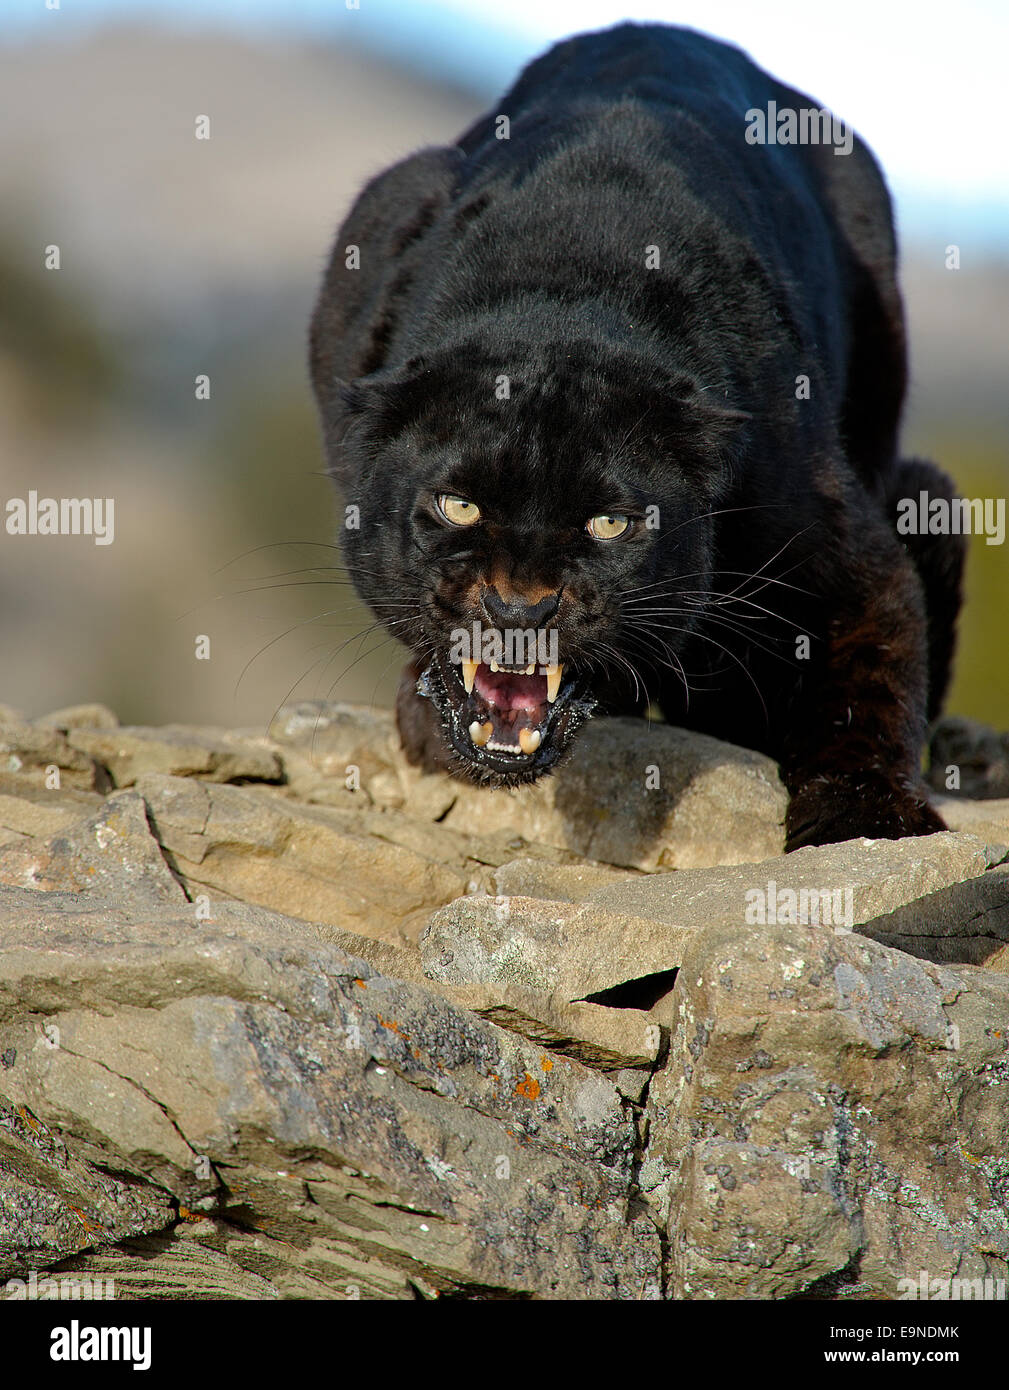 Leopard (Panthera Pardus - melanistische schwarz in Gefangenschaft, Bozeman, Montana, USA Stockfoto